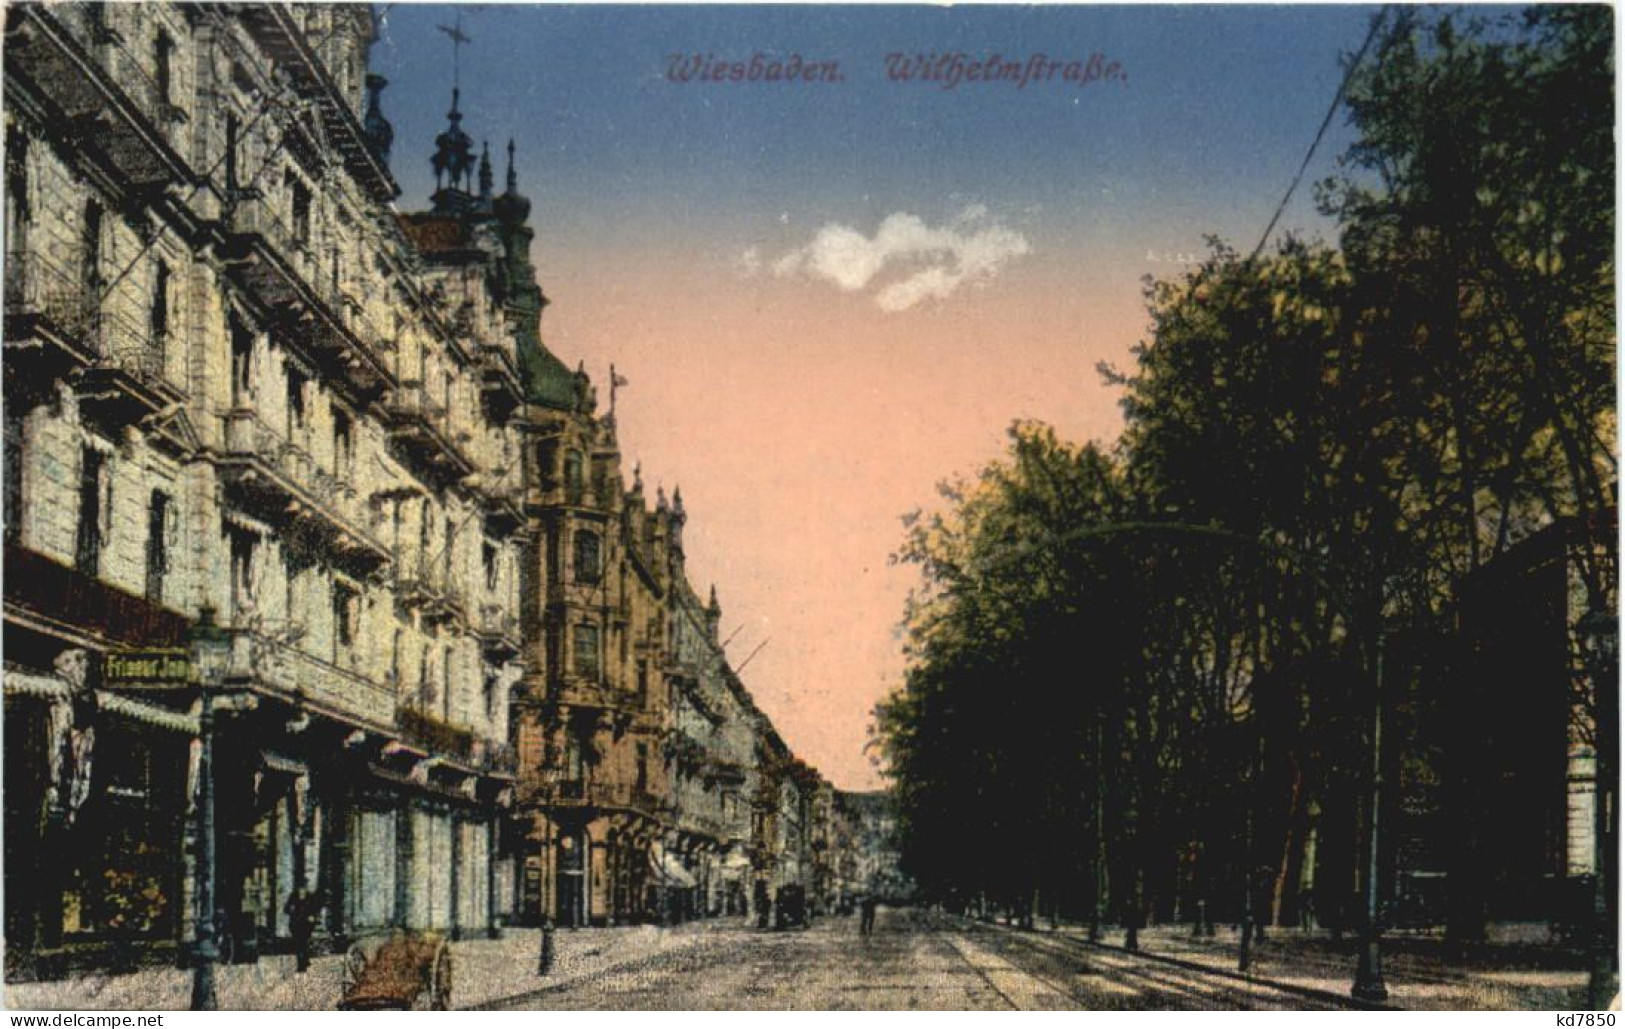 Wiesbaden - Wilhelmstrasse - Wiesbaden